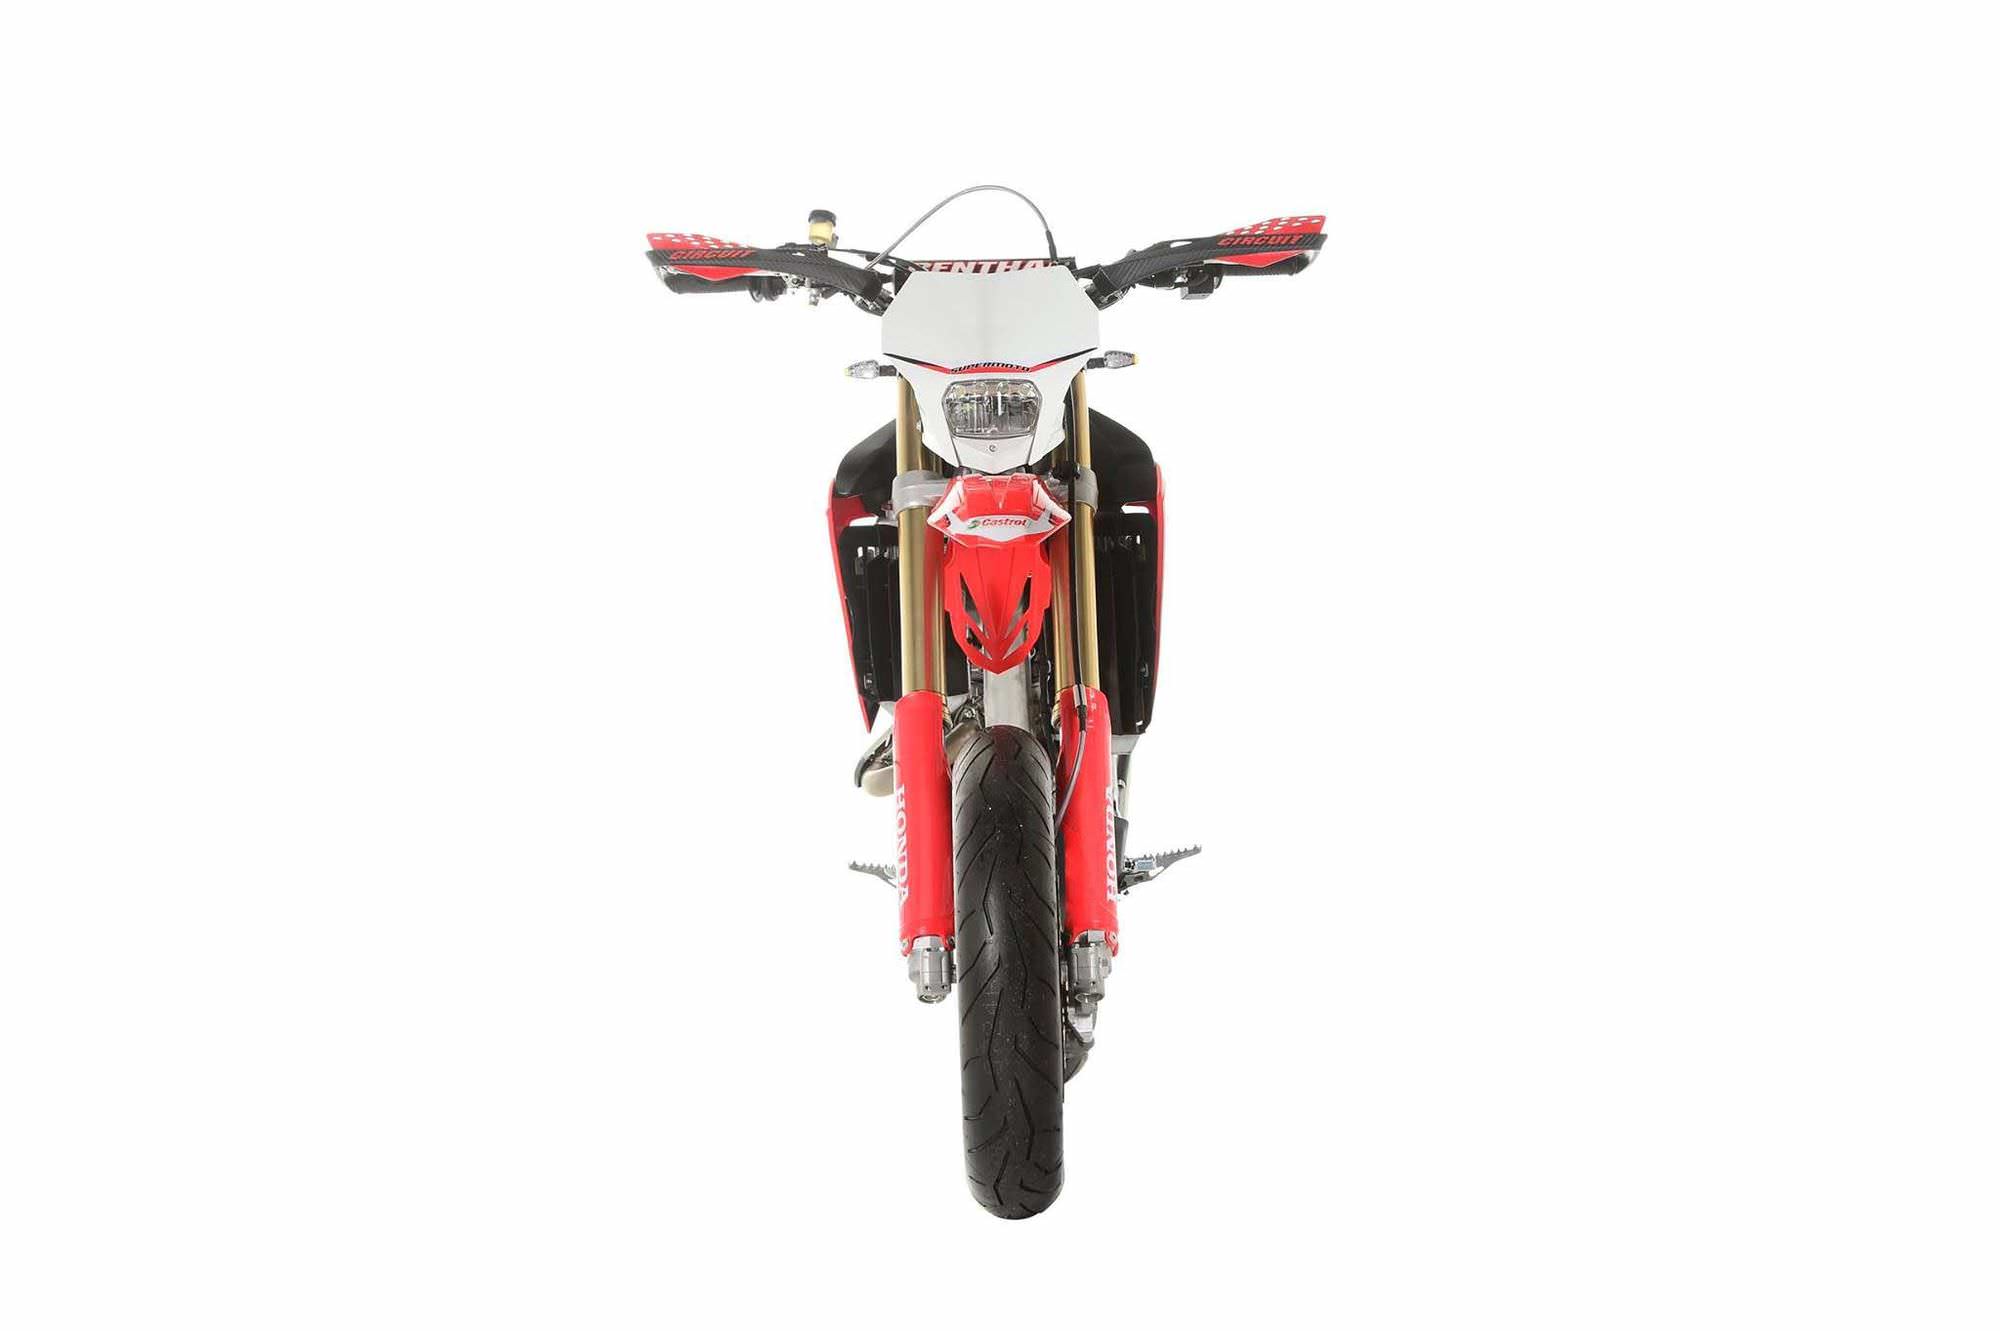 2017 Honda CRF450R SuperMoto Motard Bike / Motorcycle Review & Specs - CRF450R, CRF450X, CRF500R, CRF500X CRF Models